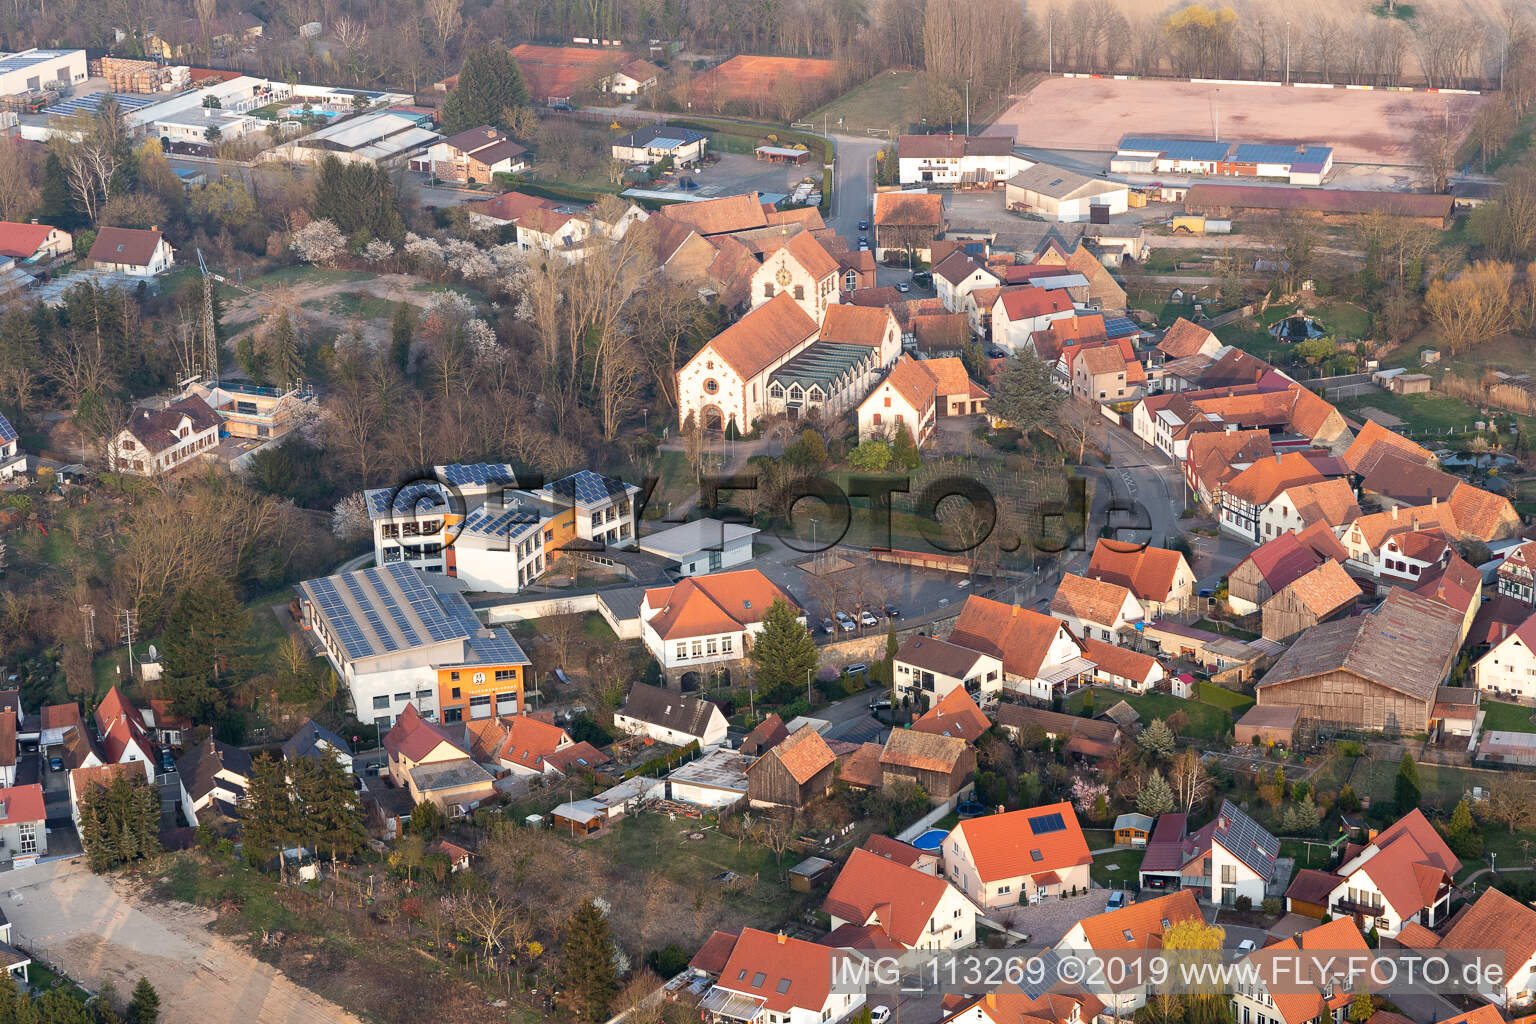 Primary school in Rülzheim in the state Rhineland-Palatinate, Germany